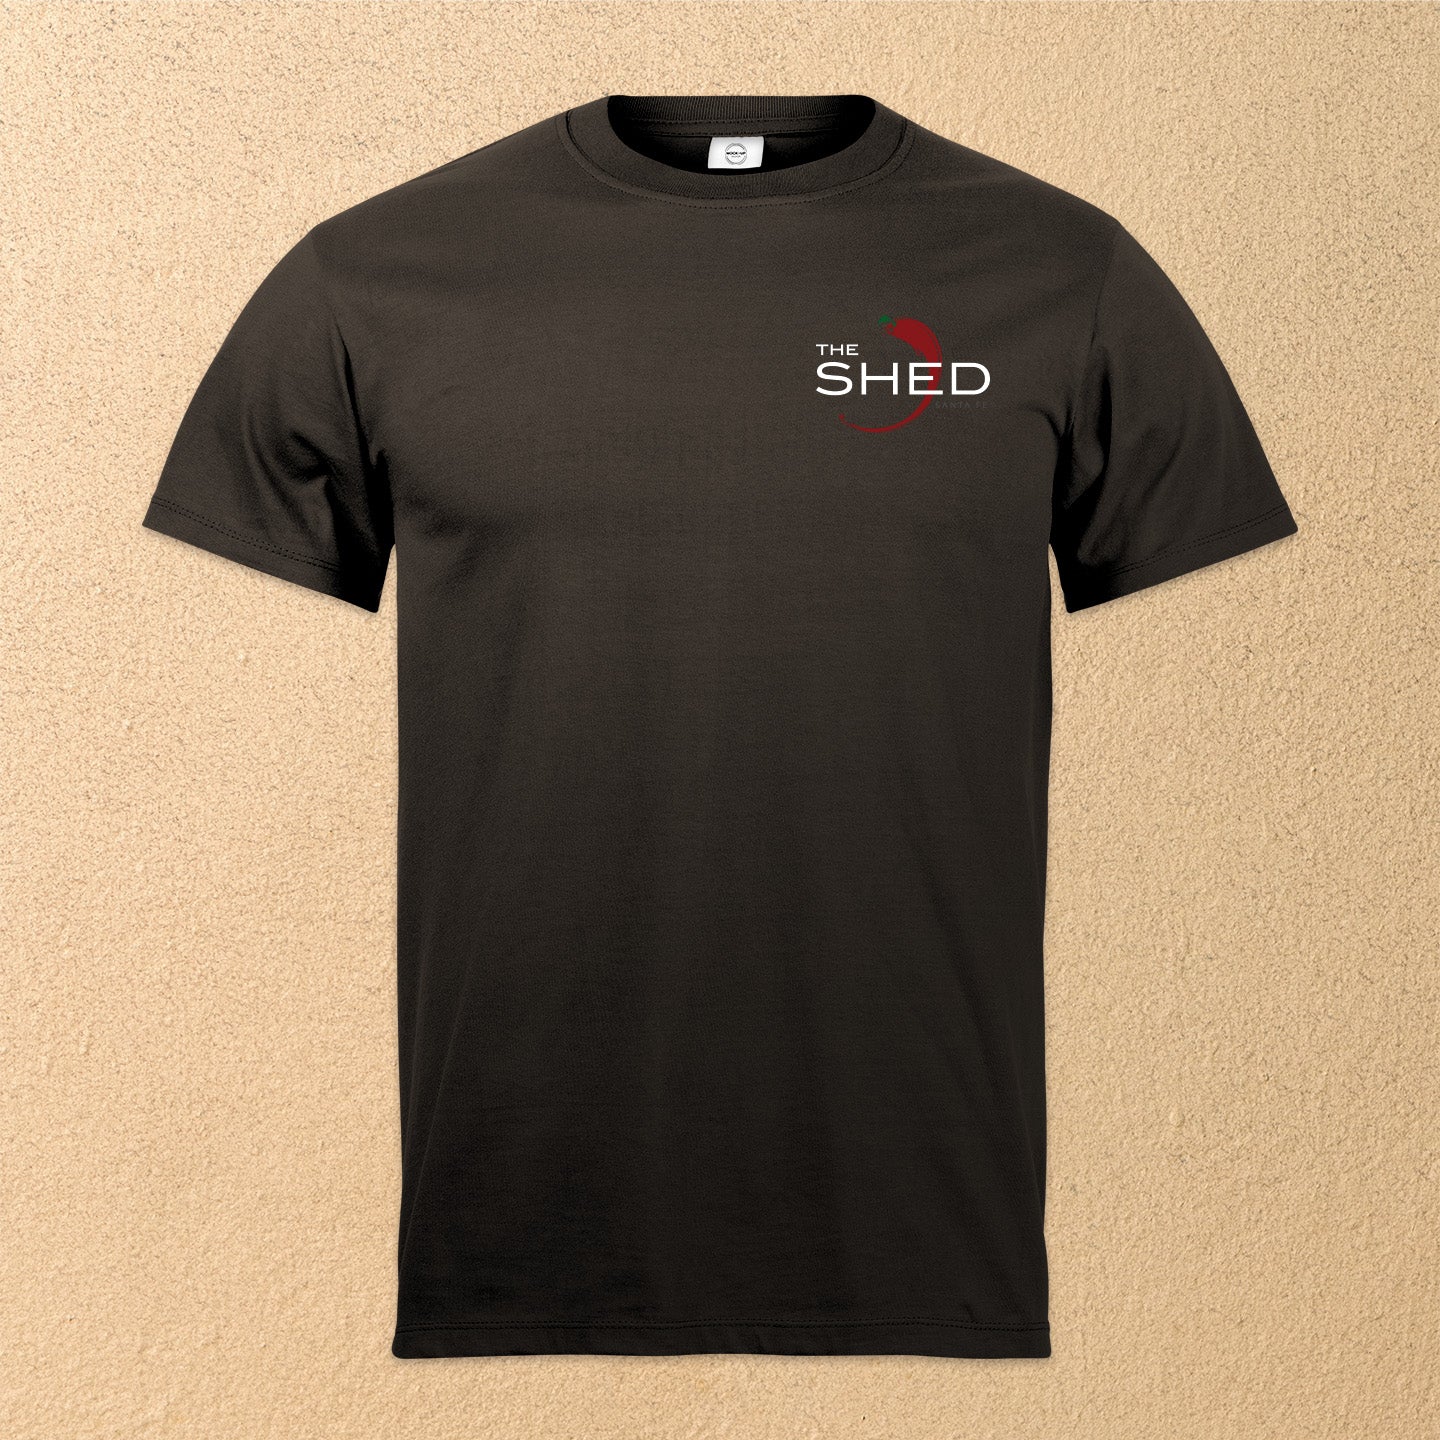 "The Shed Chile" Men's Short-Sleeved T-Shirt - Black